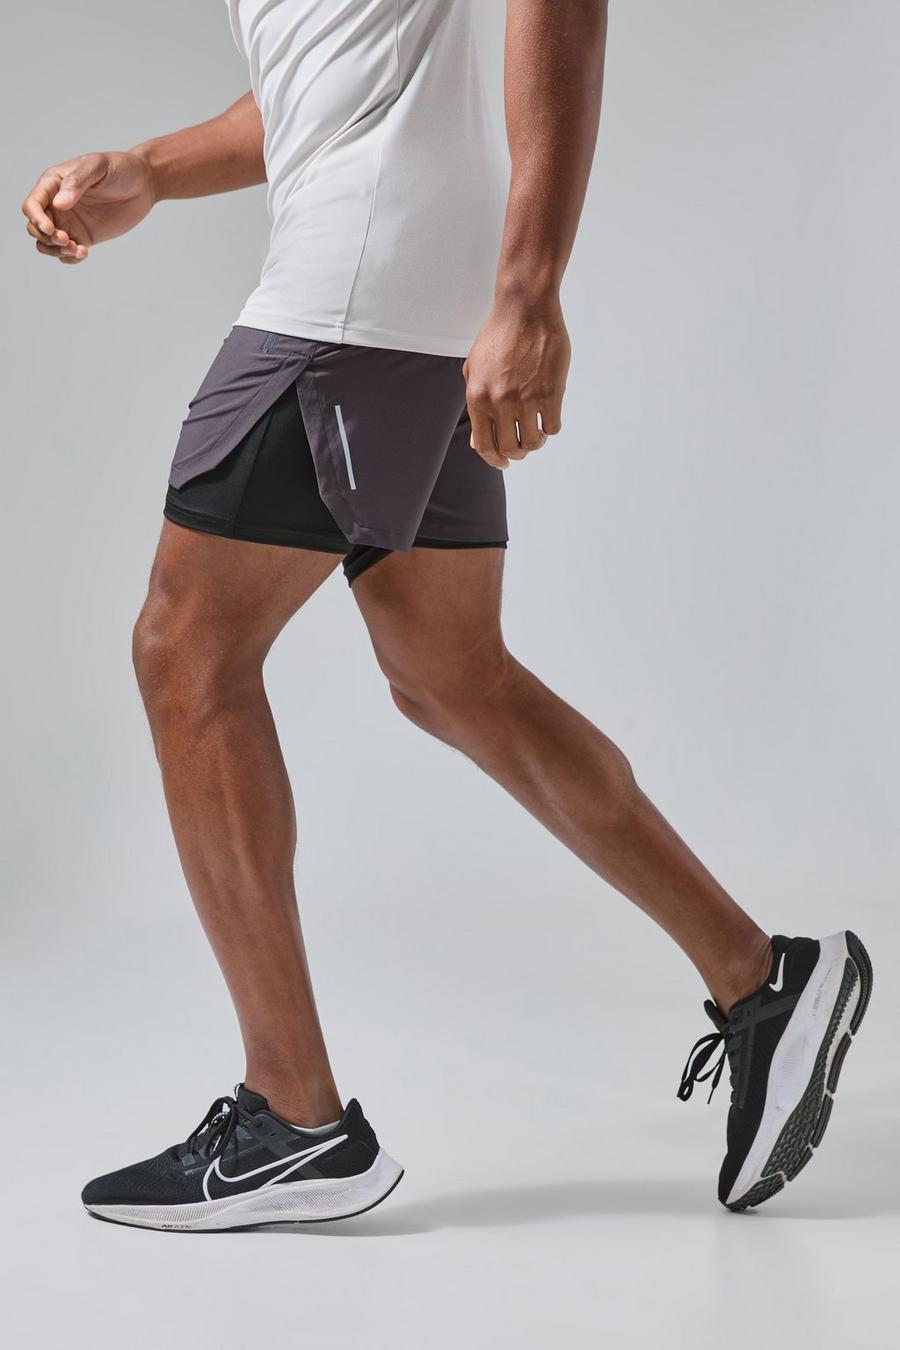 Pantaloncini Man Active 2 in 1 con spacco estremo da 7,6 cm, Charcoal